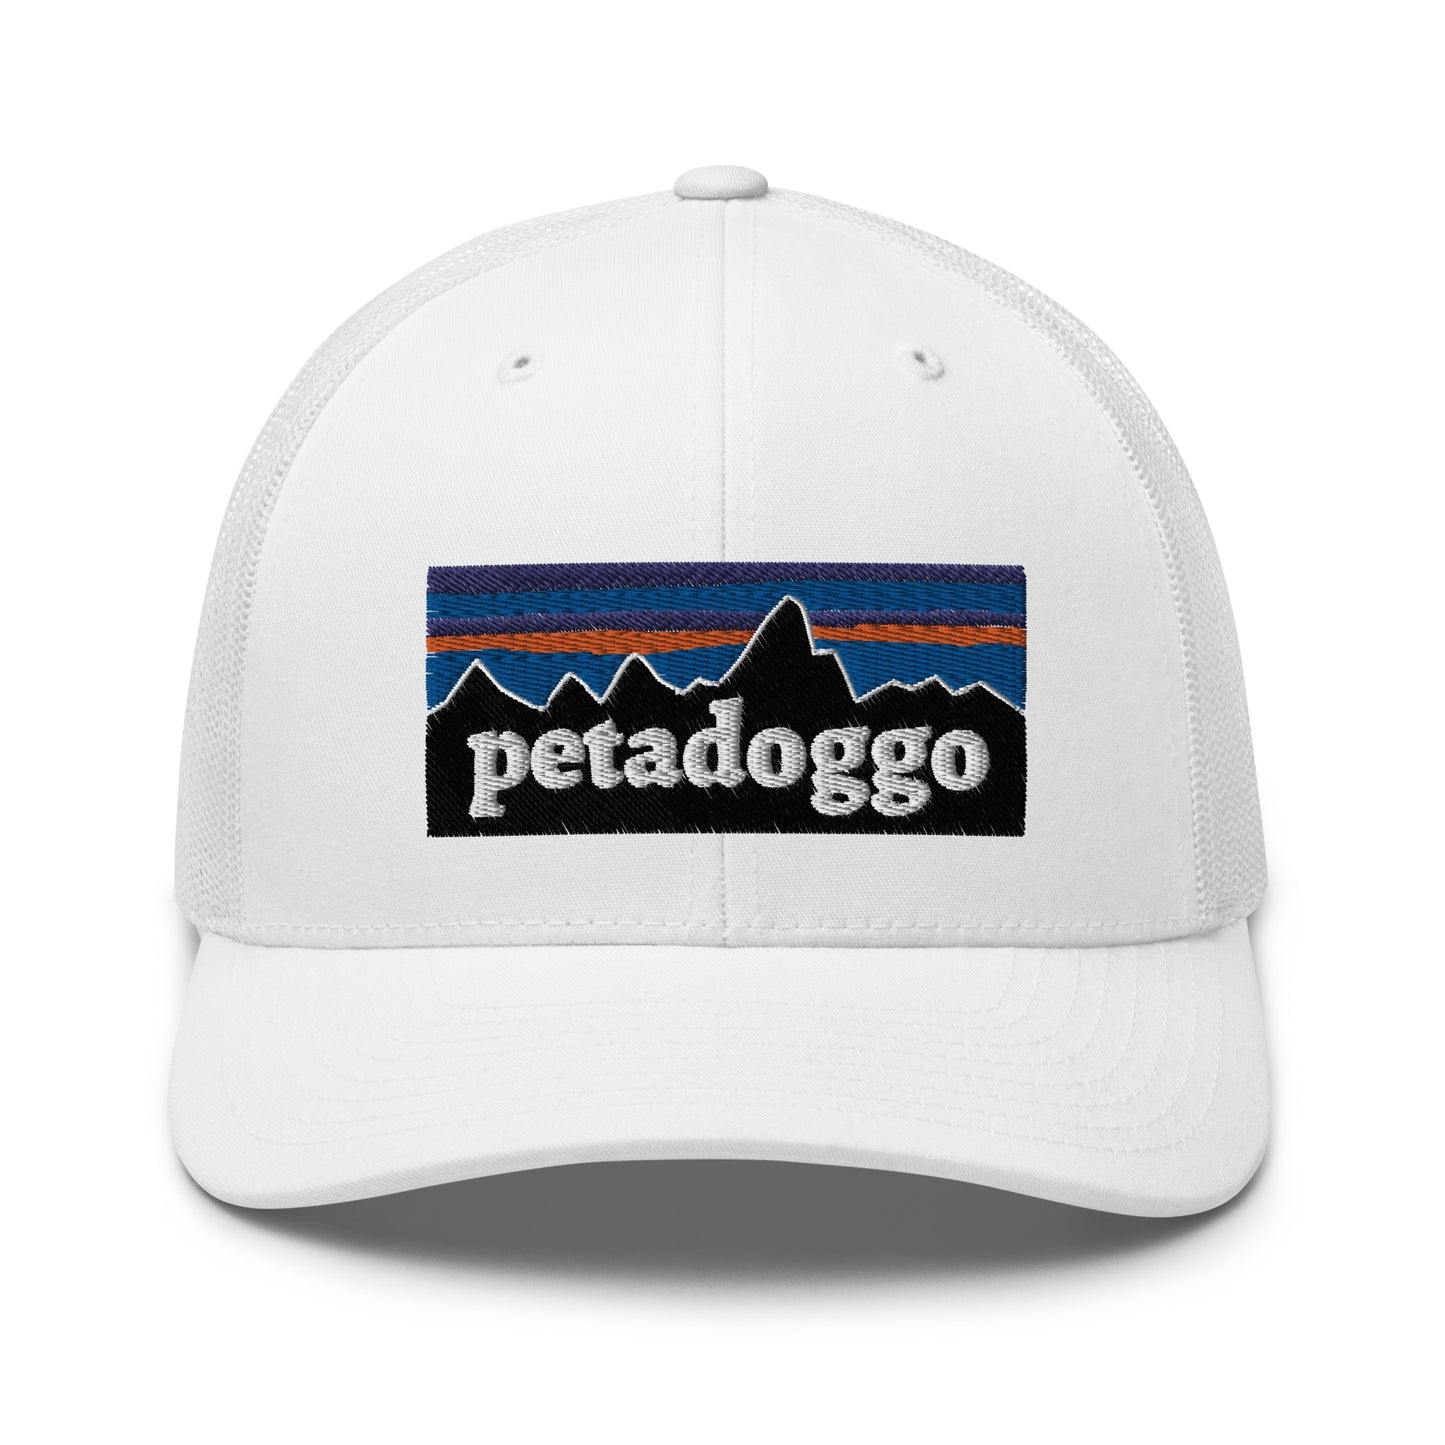 Petadoggo Trucker Cap